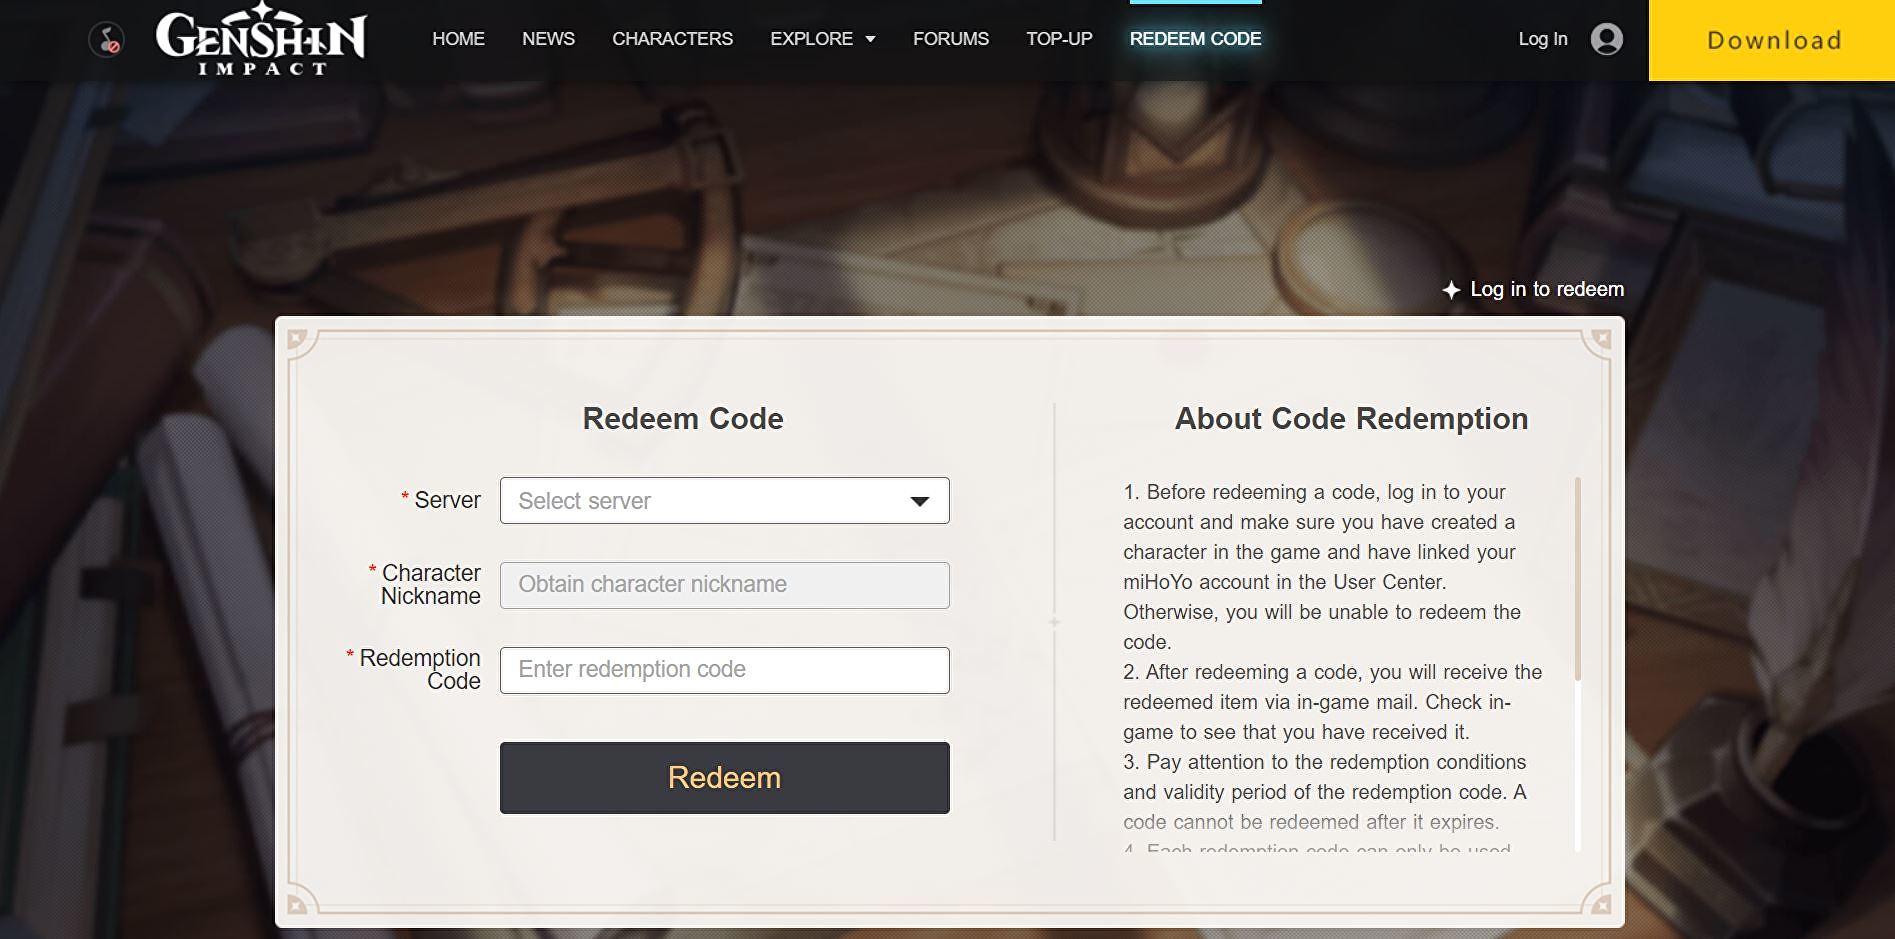 Website image showing the tab "Redeem Code"